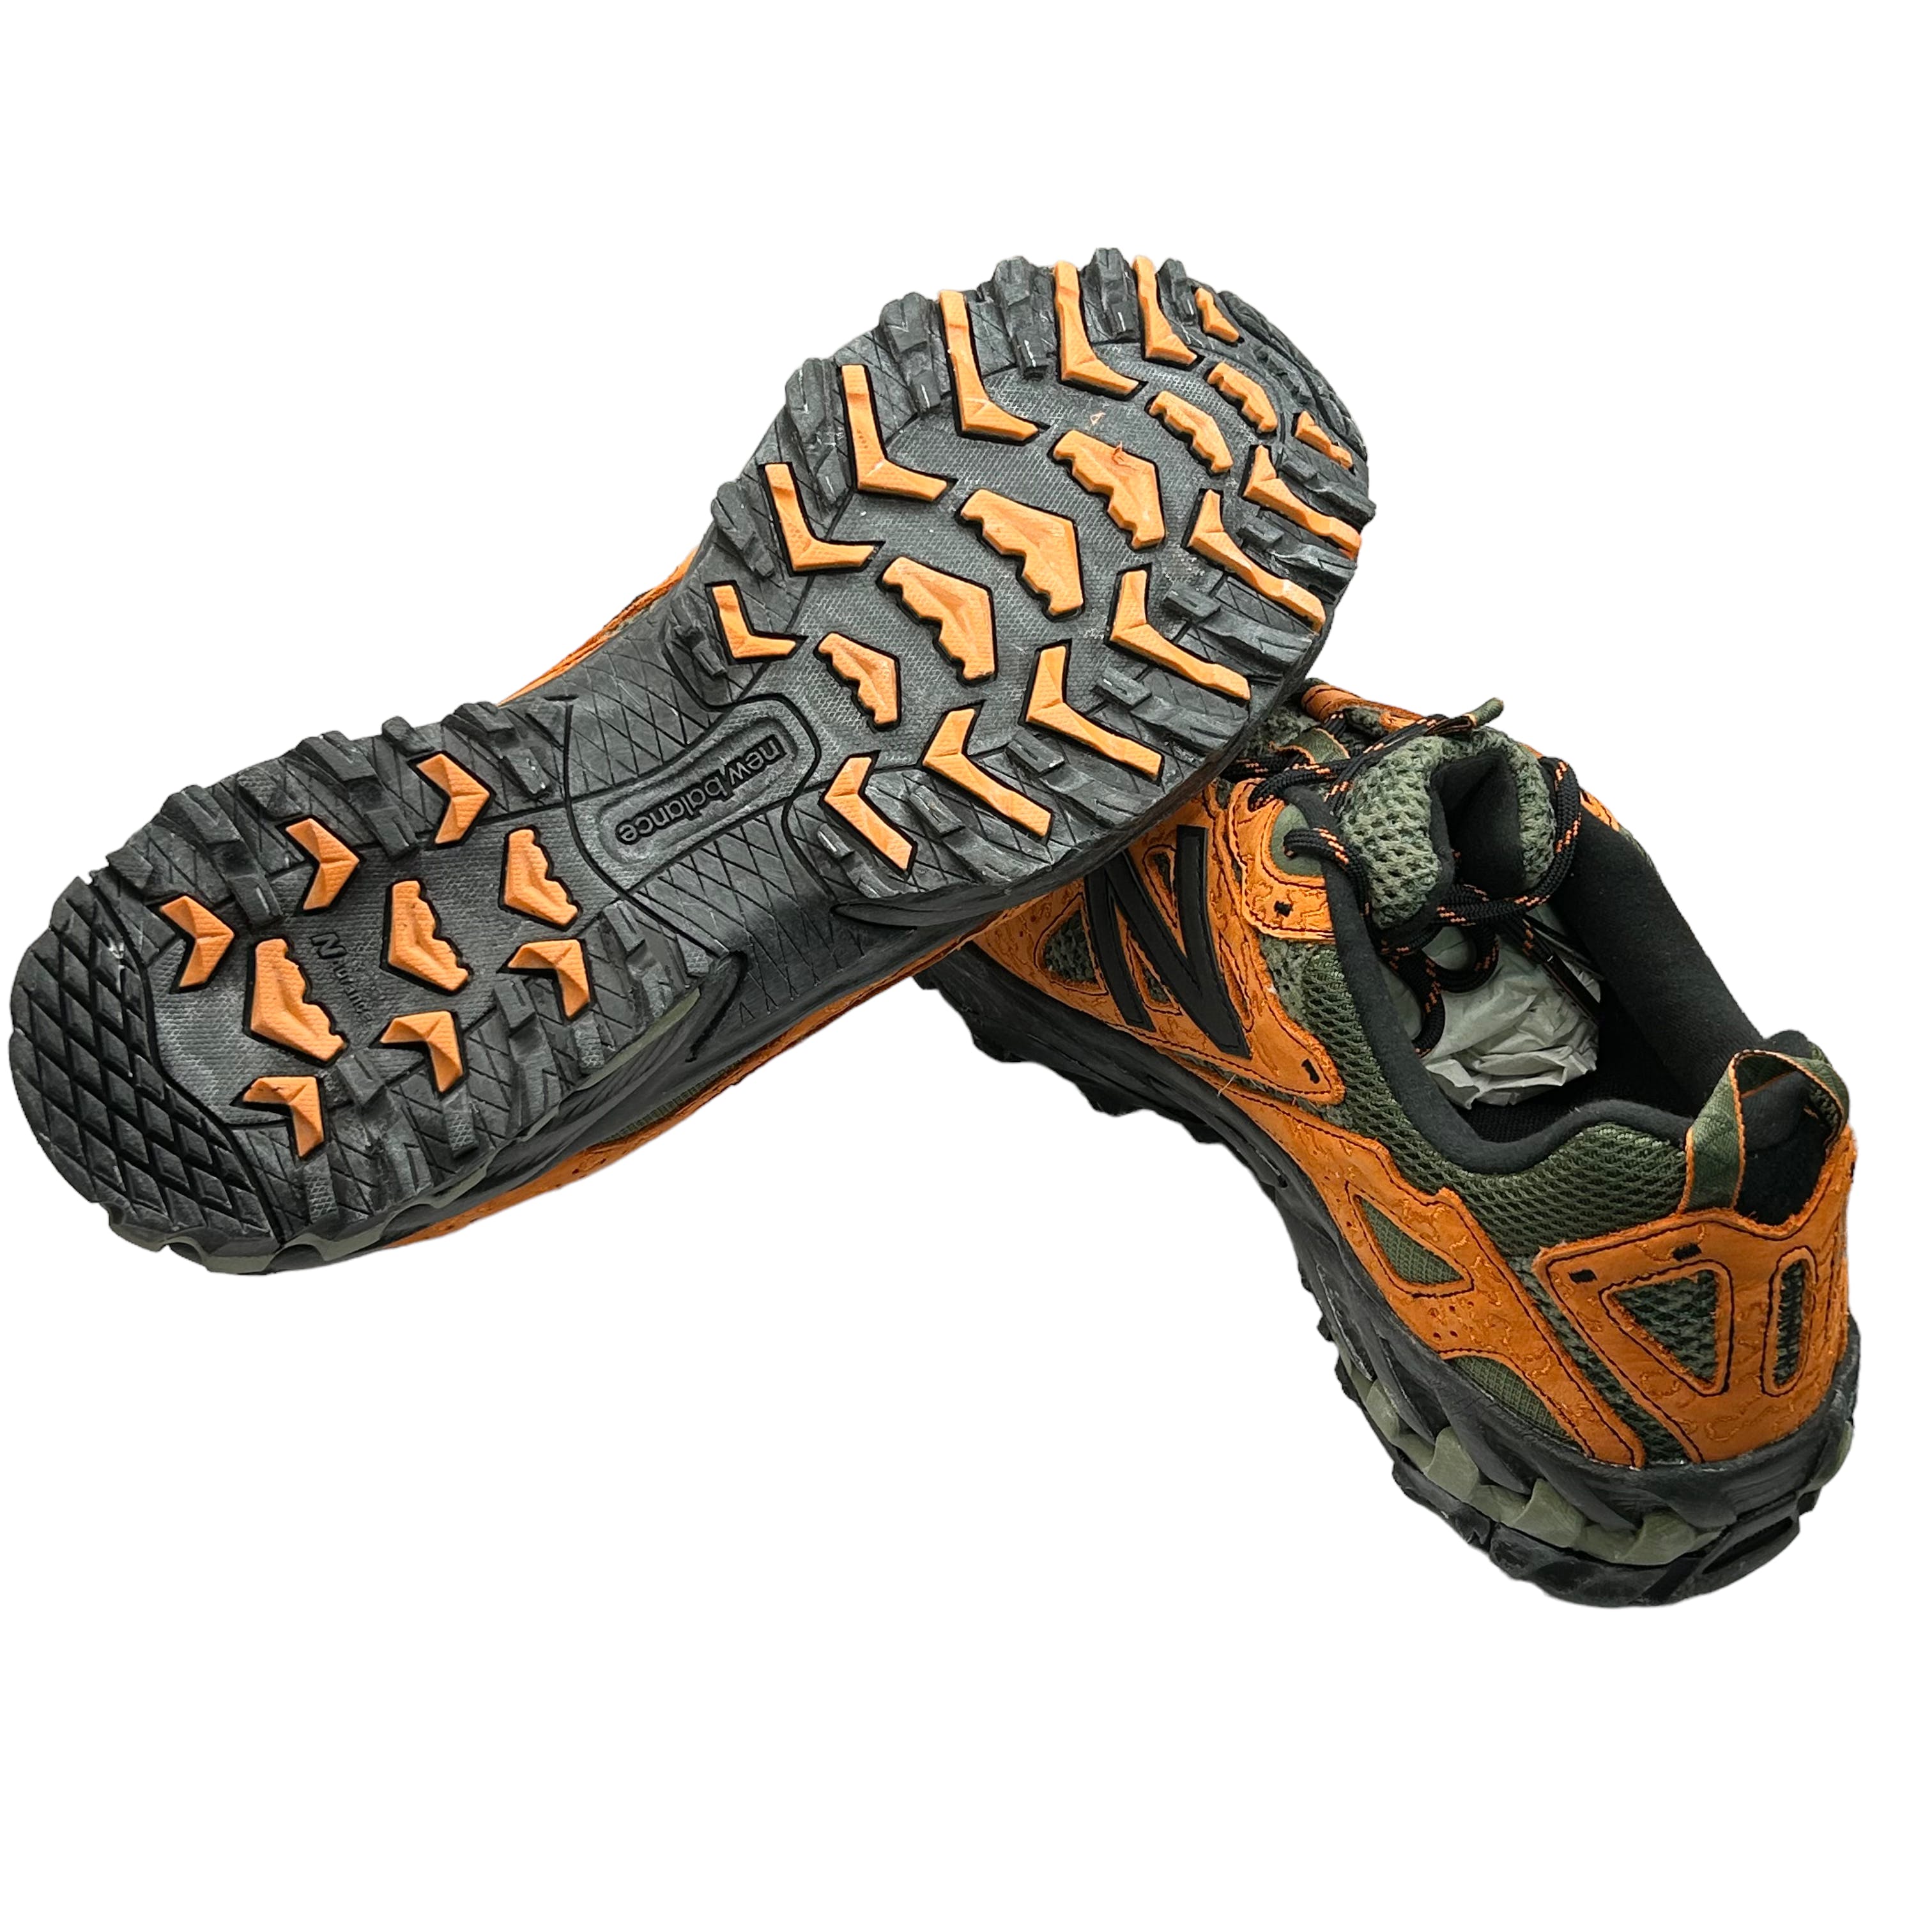 JFG x NB 610 “Lil Swamps” Hiking Shoe - 11